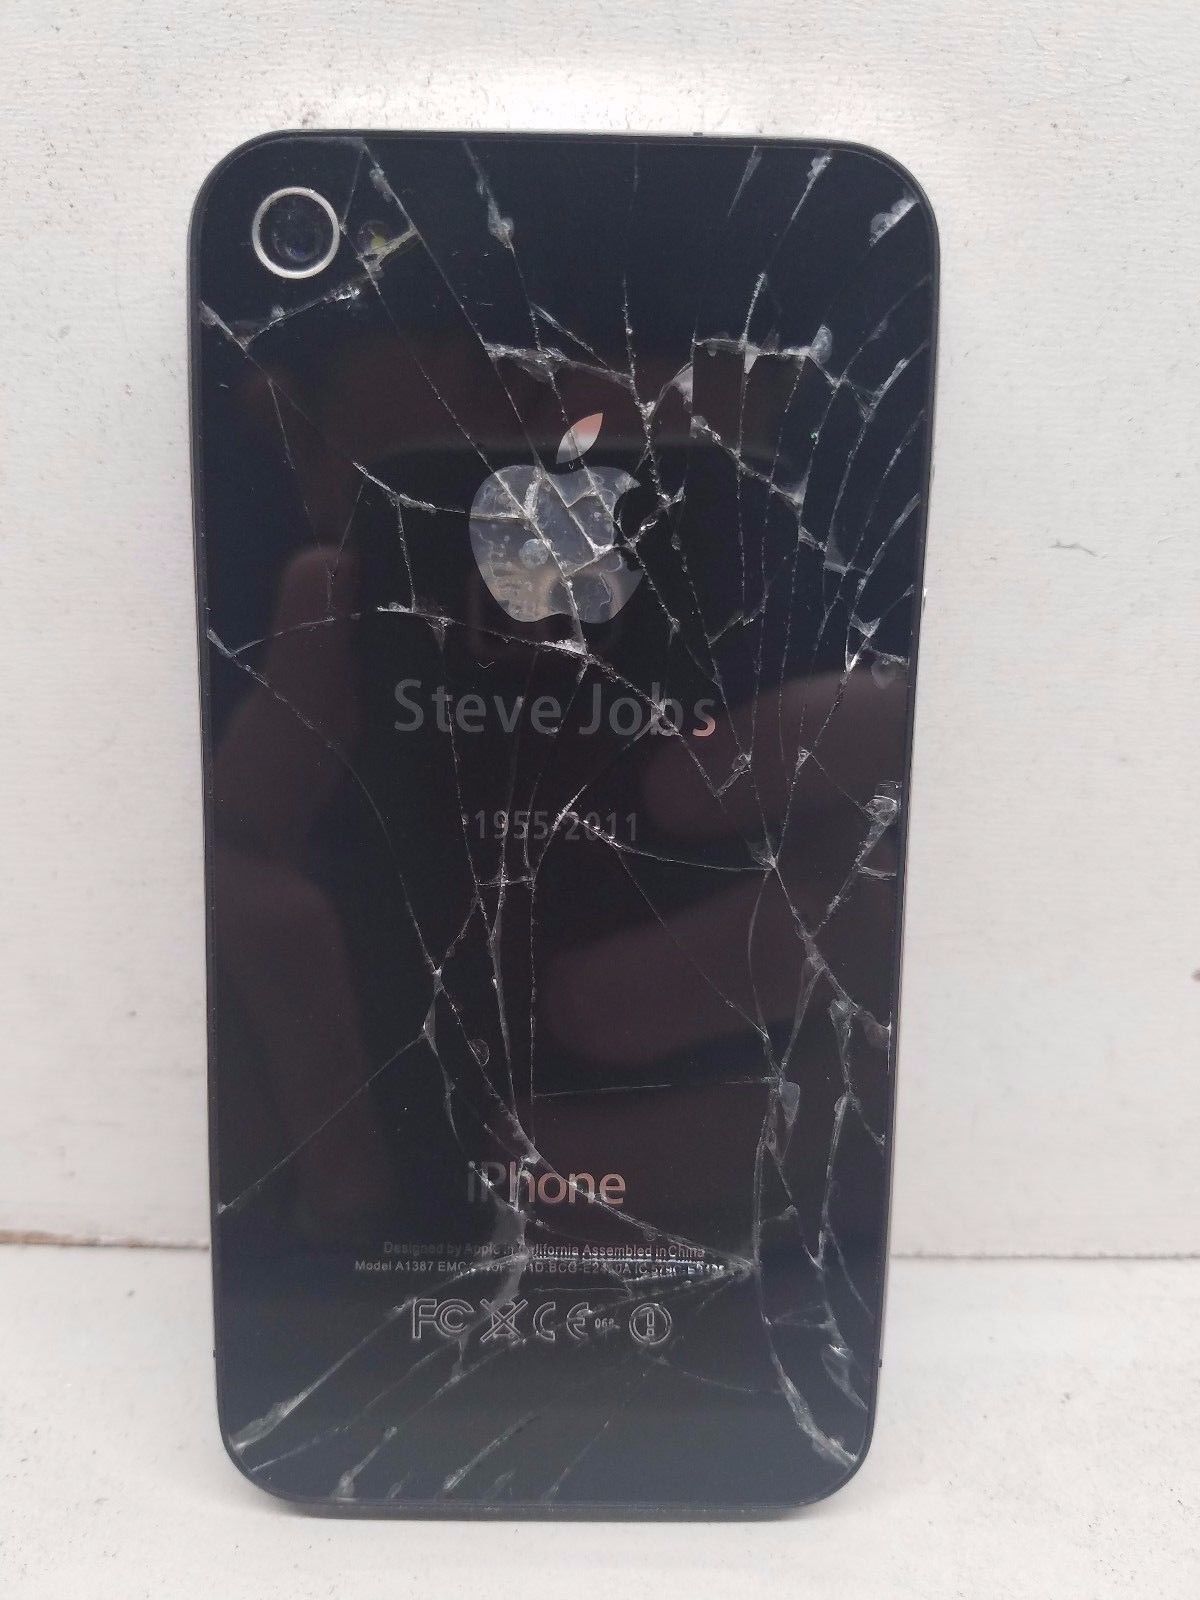 a broken iphone value 150k usd 01